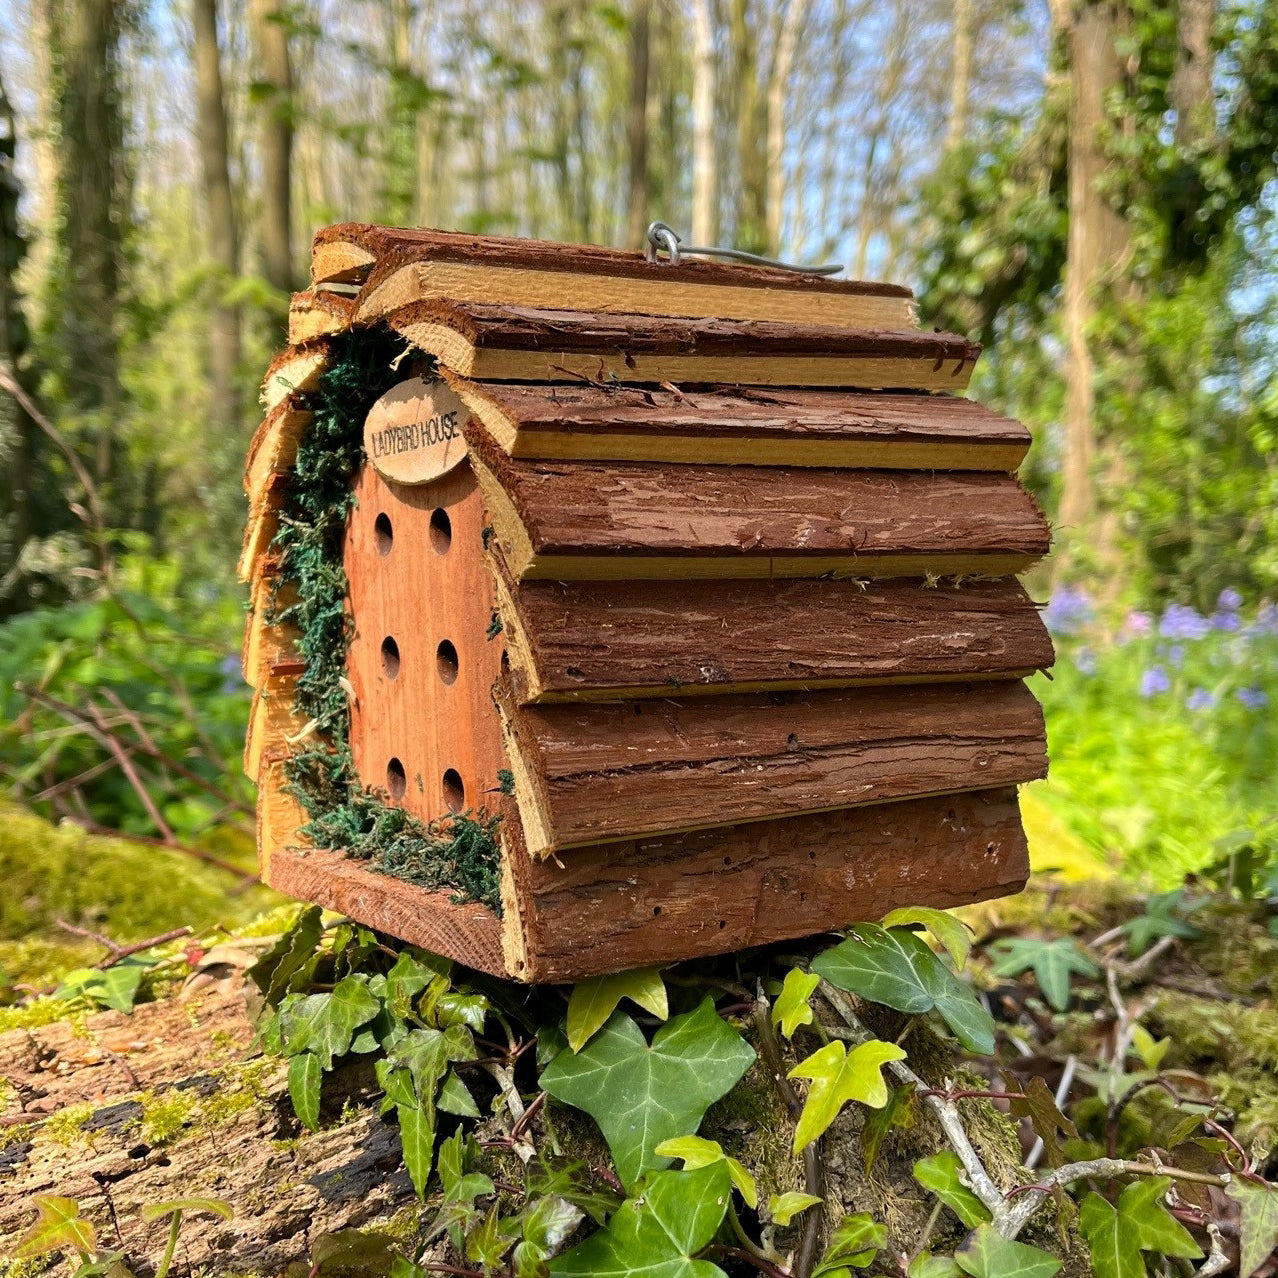 Wooden Hanging Ladybird House